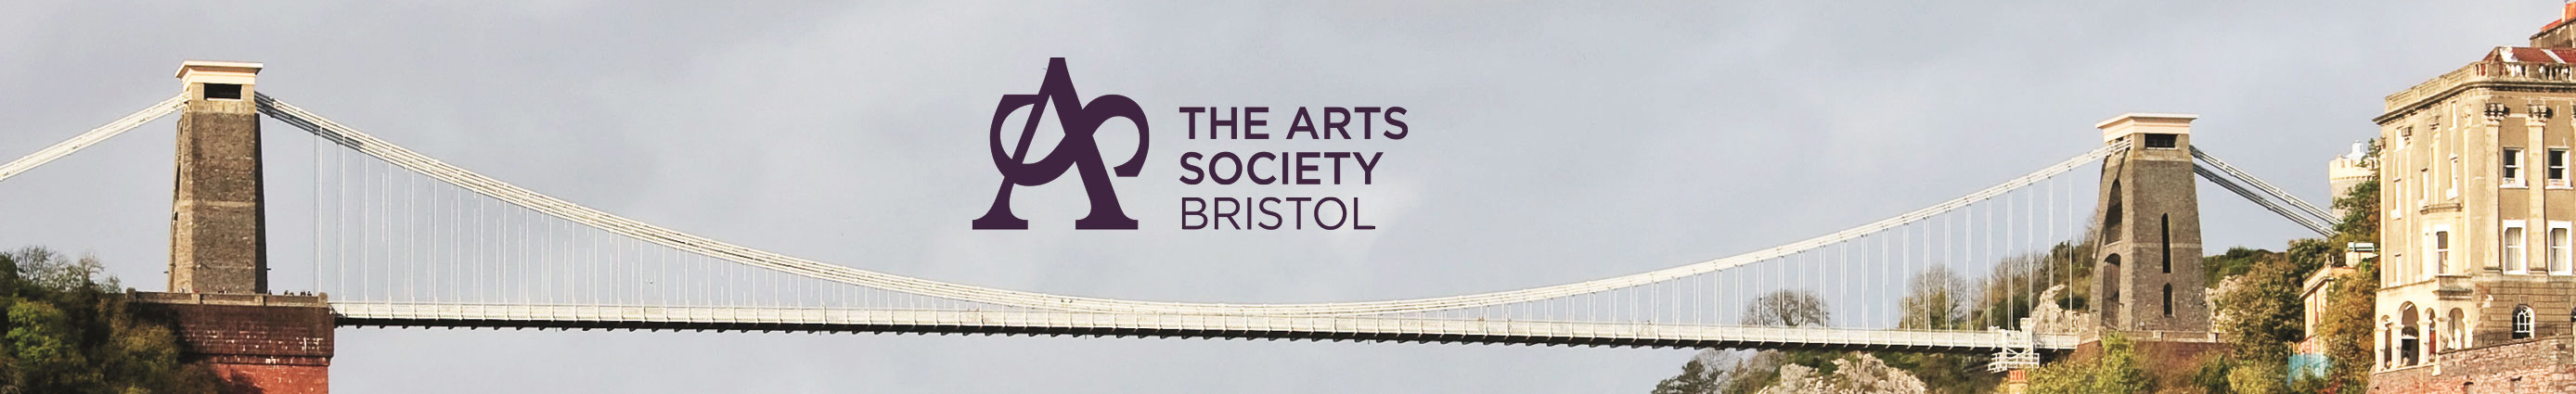 The Arts Society Bristol